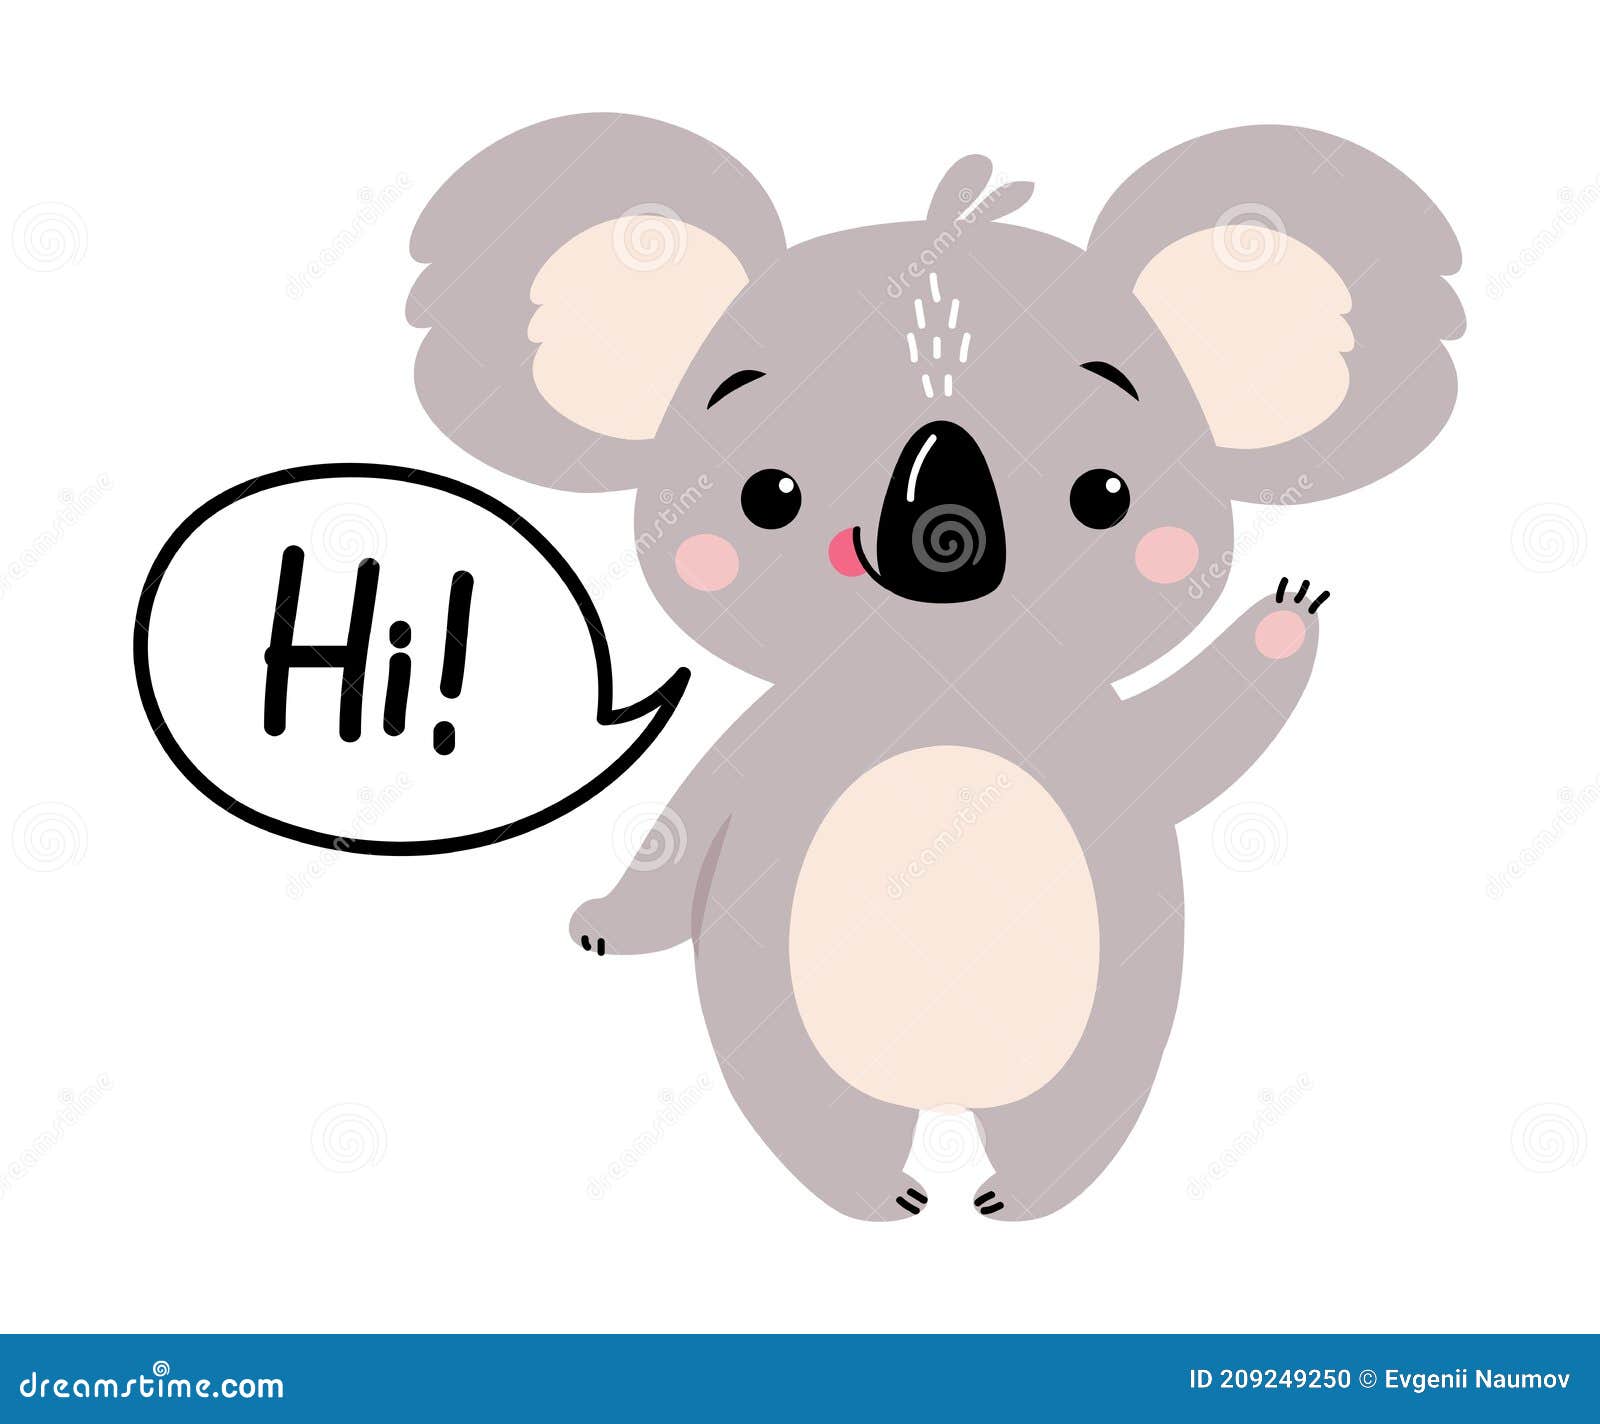 Cute Koala Waving Its Paw and Saying Hi, Adorable Australian Animal Cartoon  Vector Illustration Stock Vector - Illustration of mascot, bear: 209249250